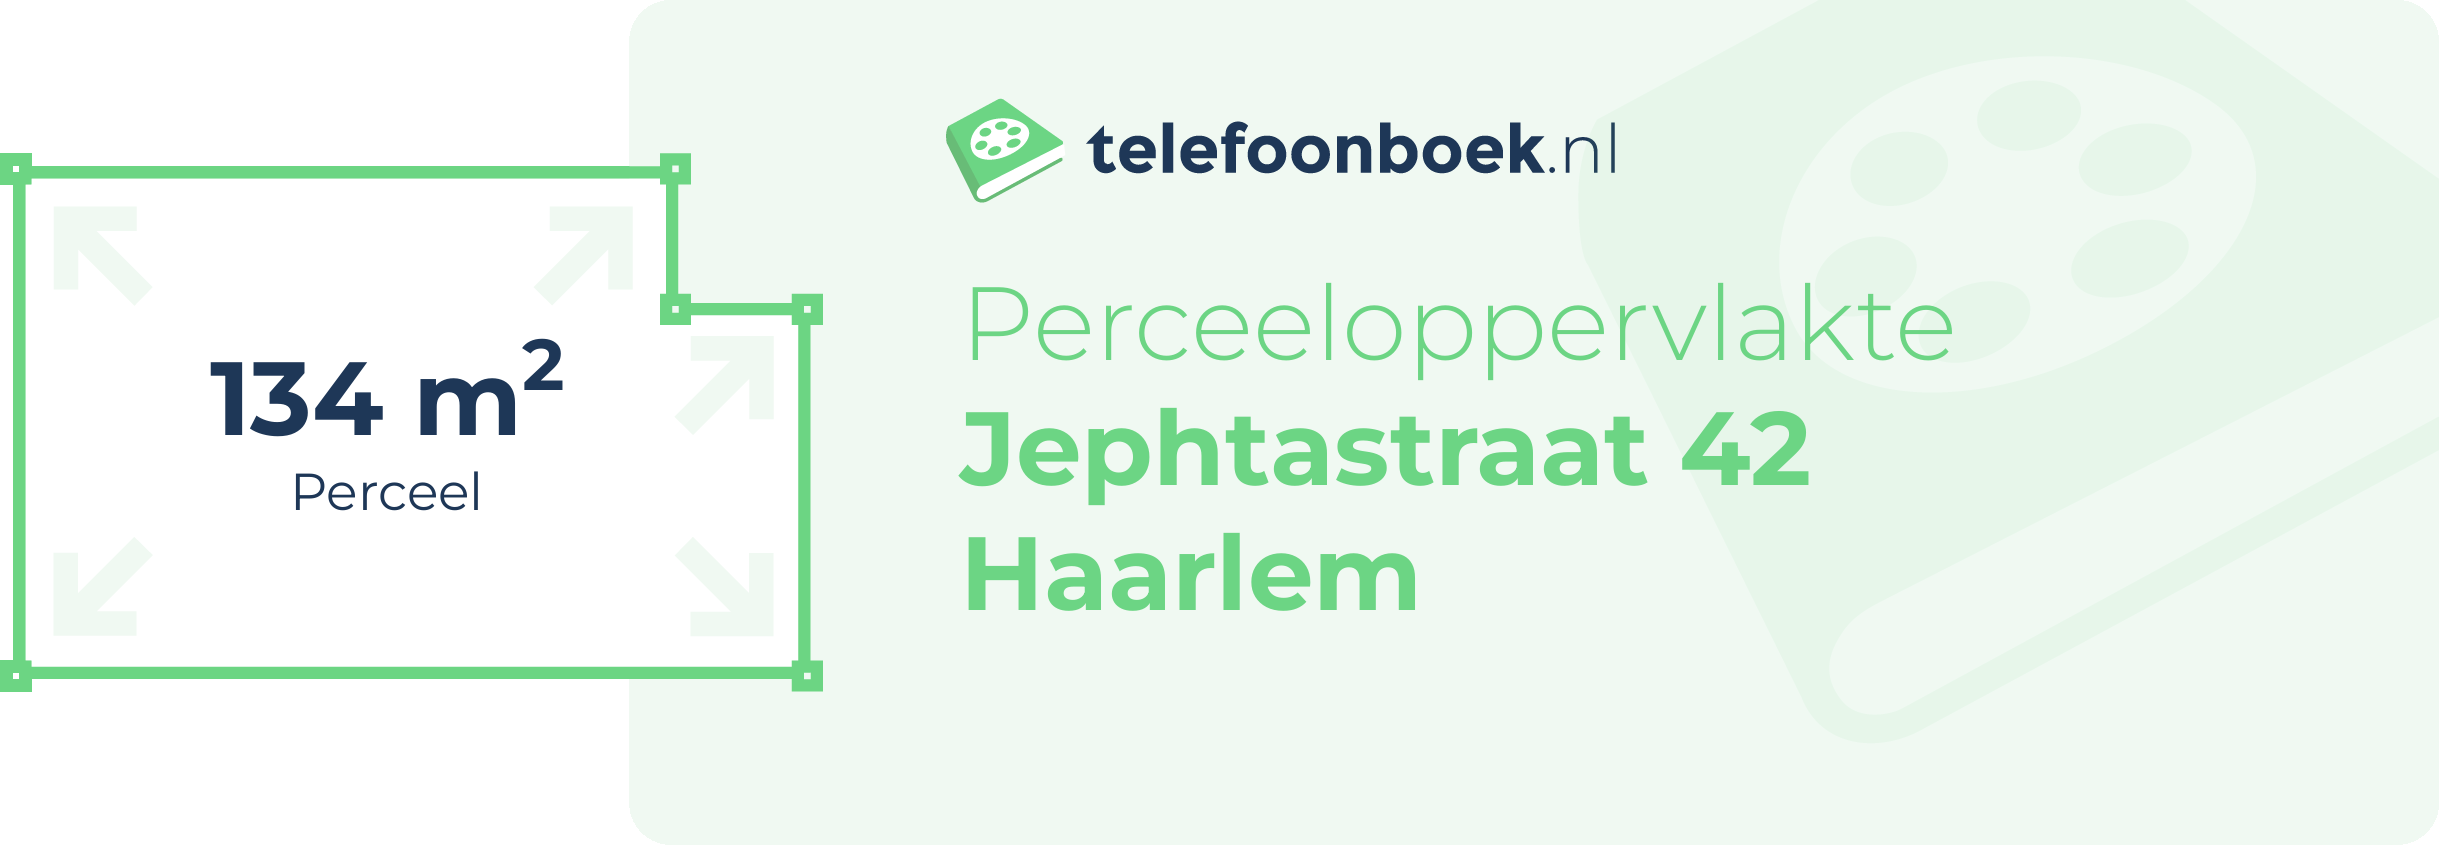 Perceeloppervlakte Jephtastraat 42 Haarlem